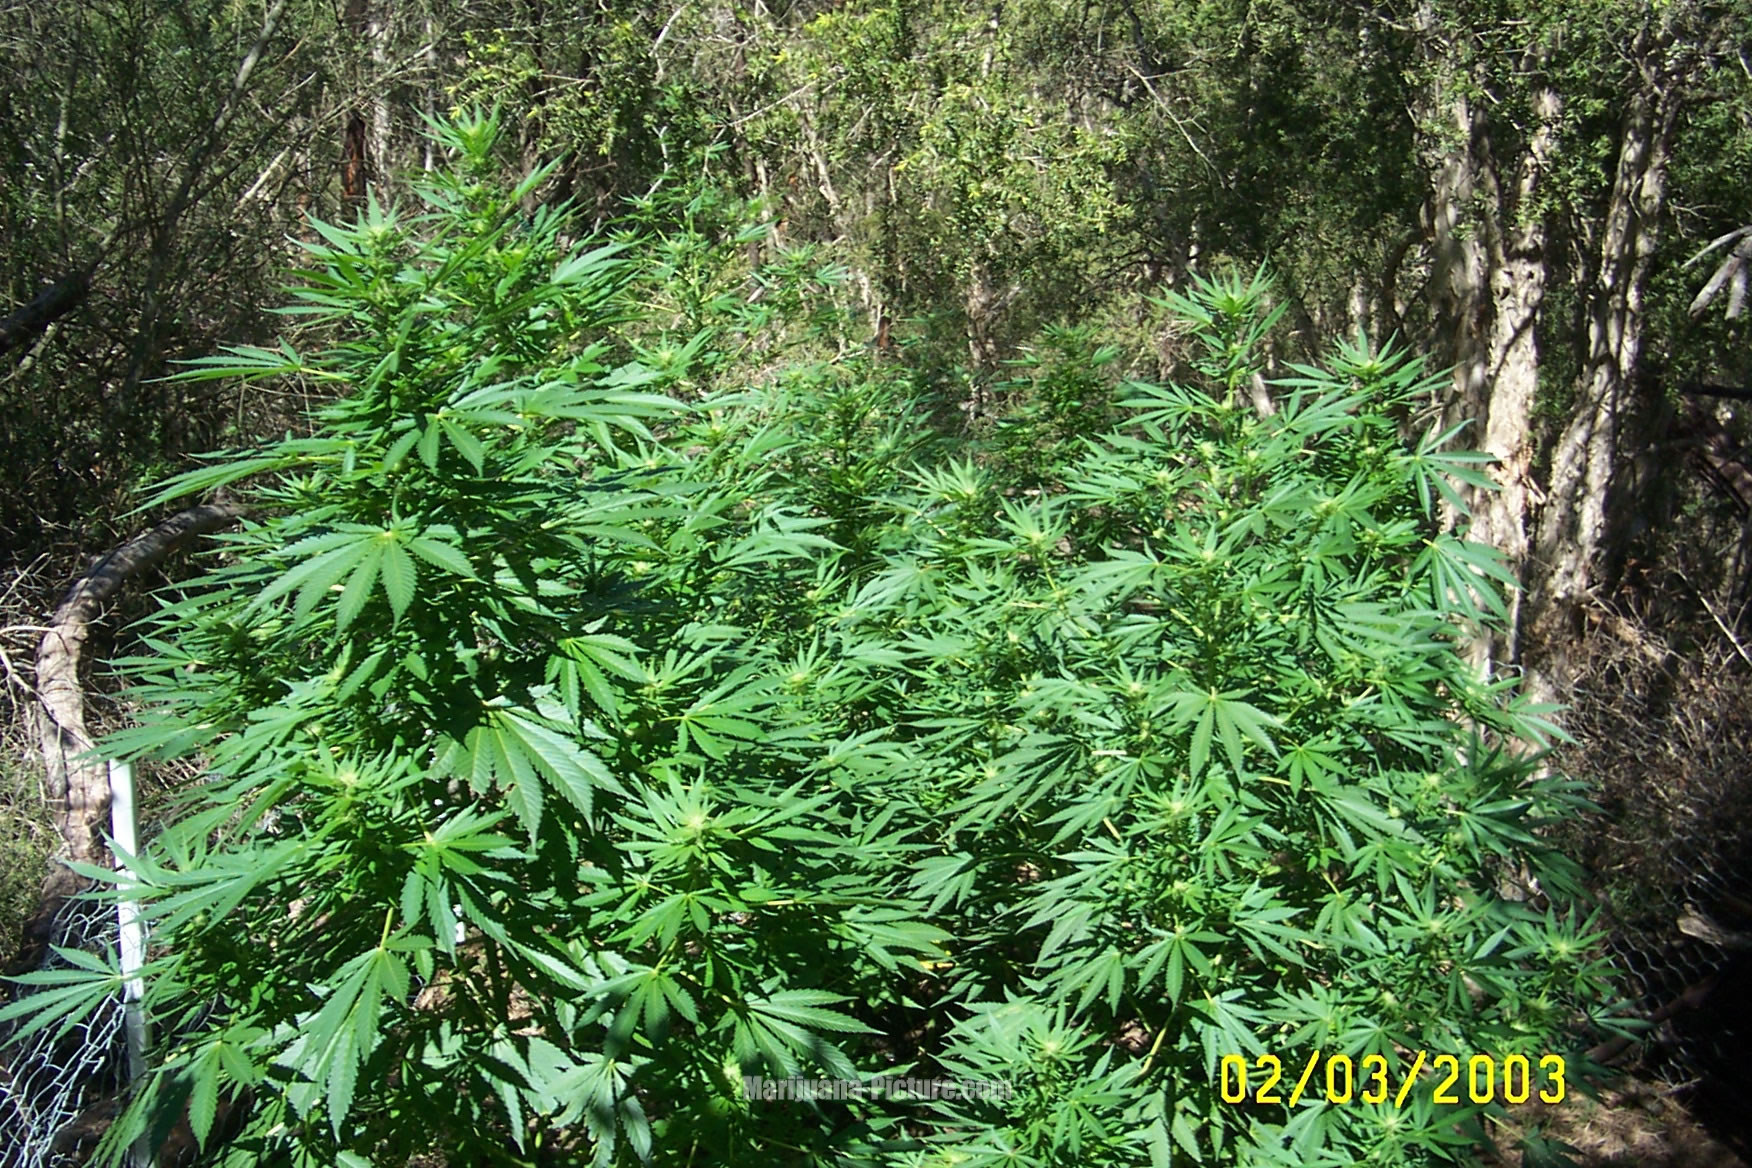 marijuana_outback_australia.jpg